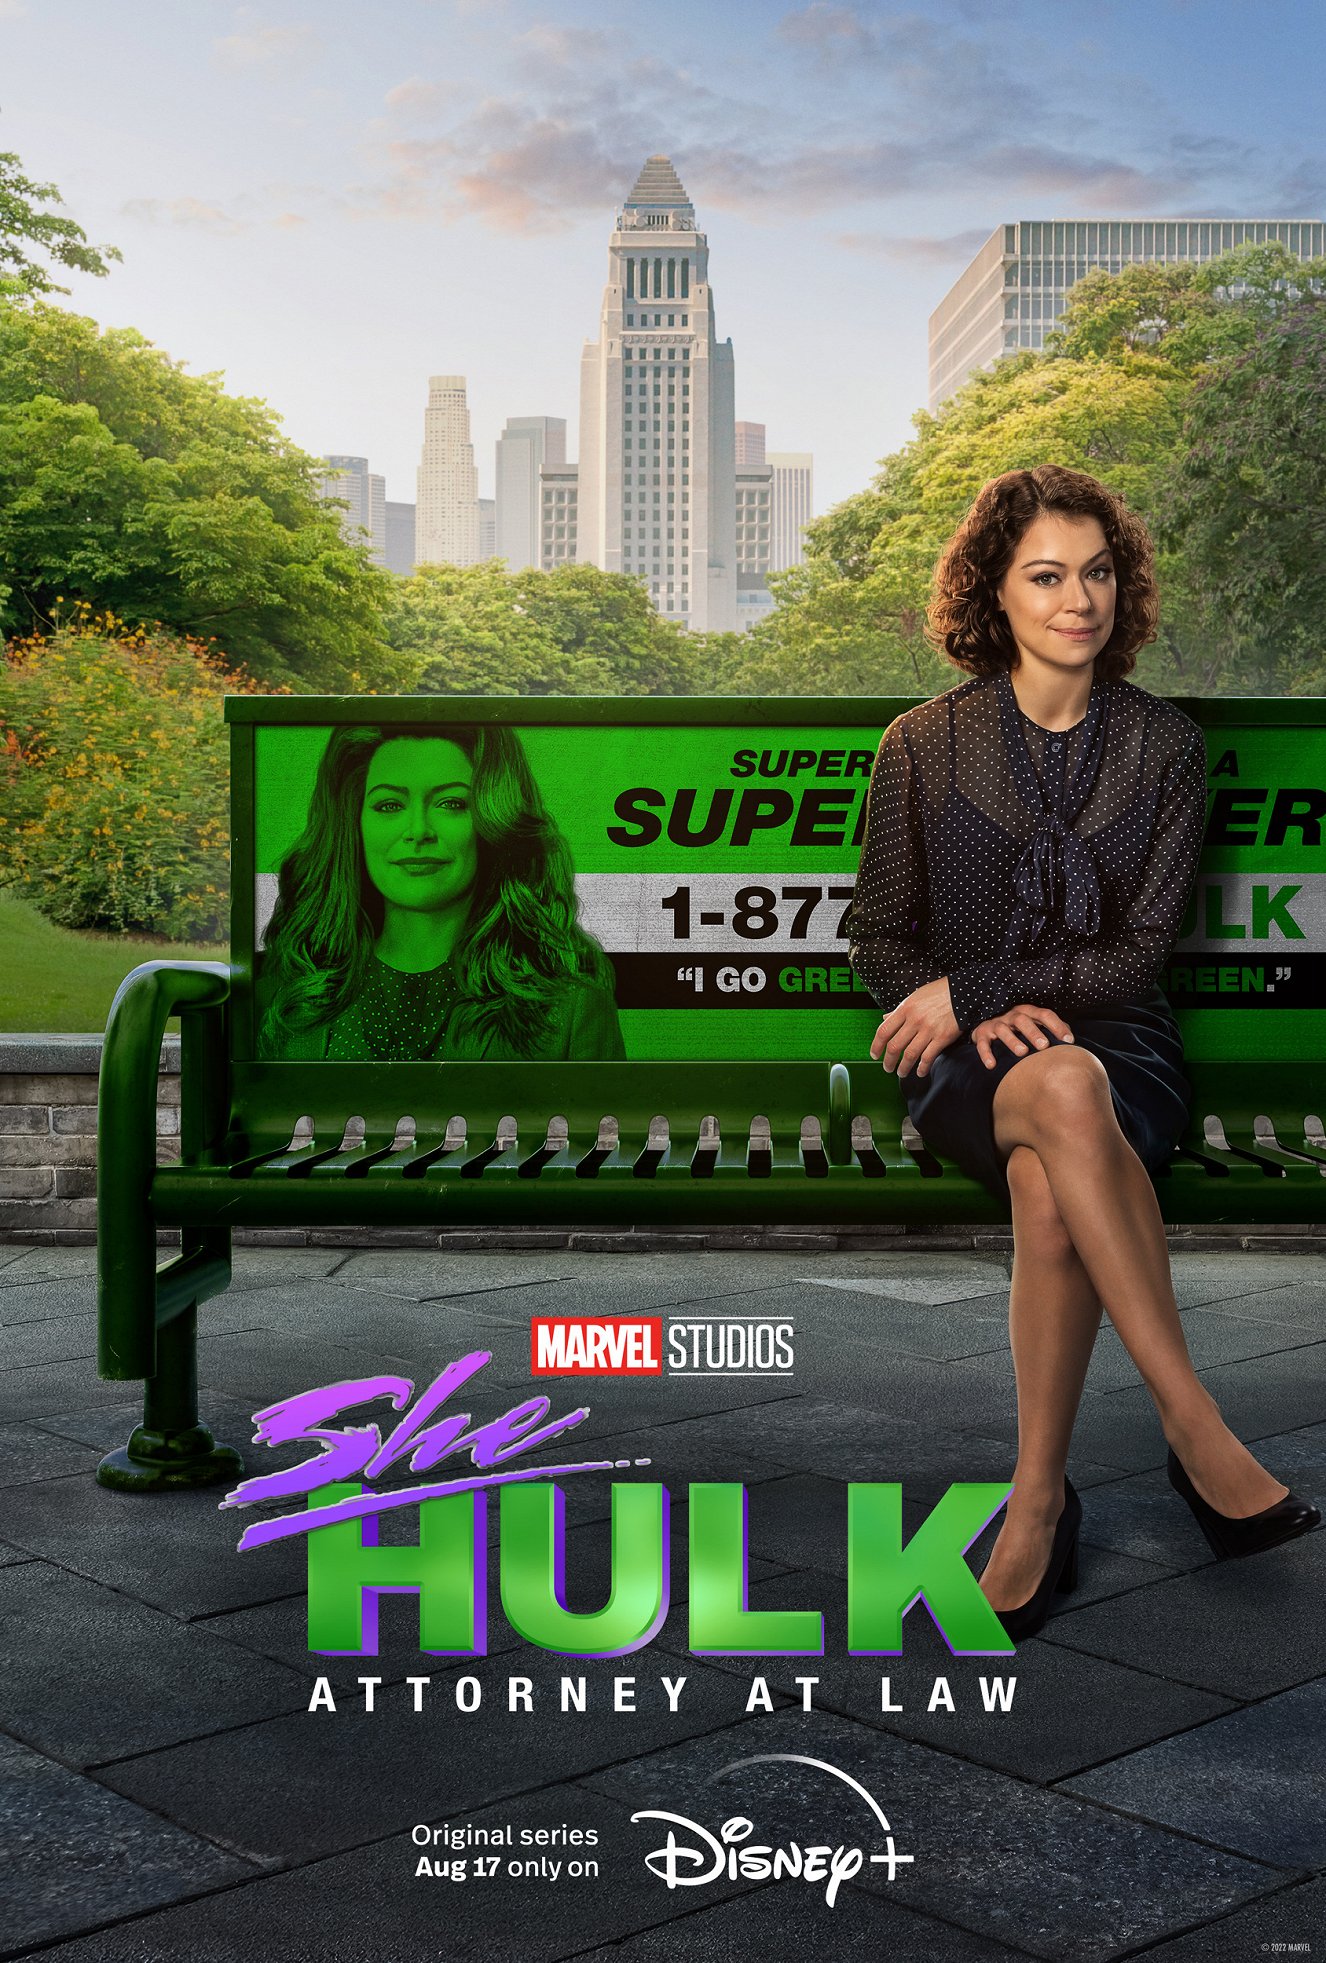 She-Hulk: Neuveritelna pravnicka / She-Hulk: Attorney at Law S01E06 (CZ/SK/EN)[WEB-DL][1080p]  = CSFD 52%